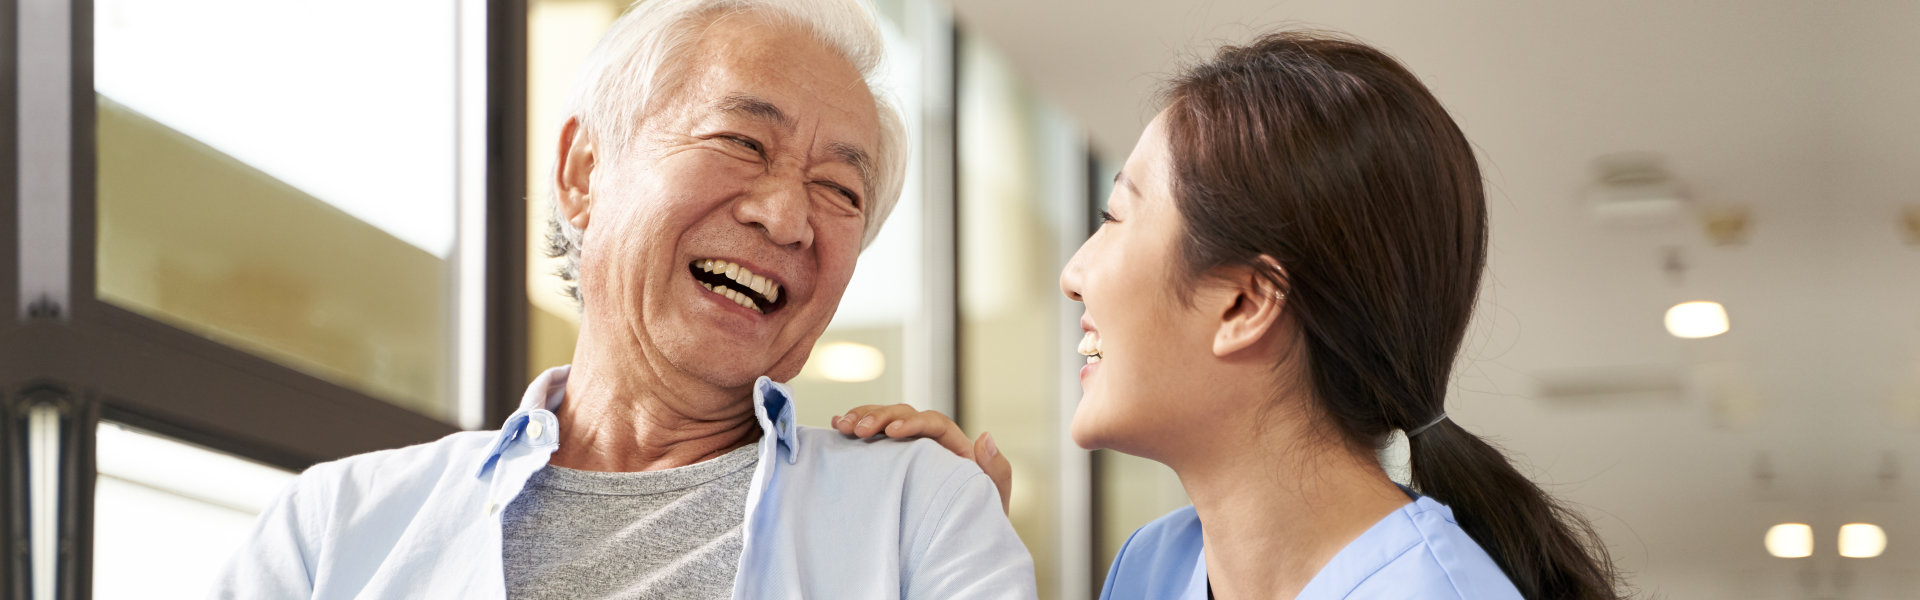 smiling caregiver with senior man